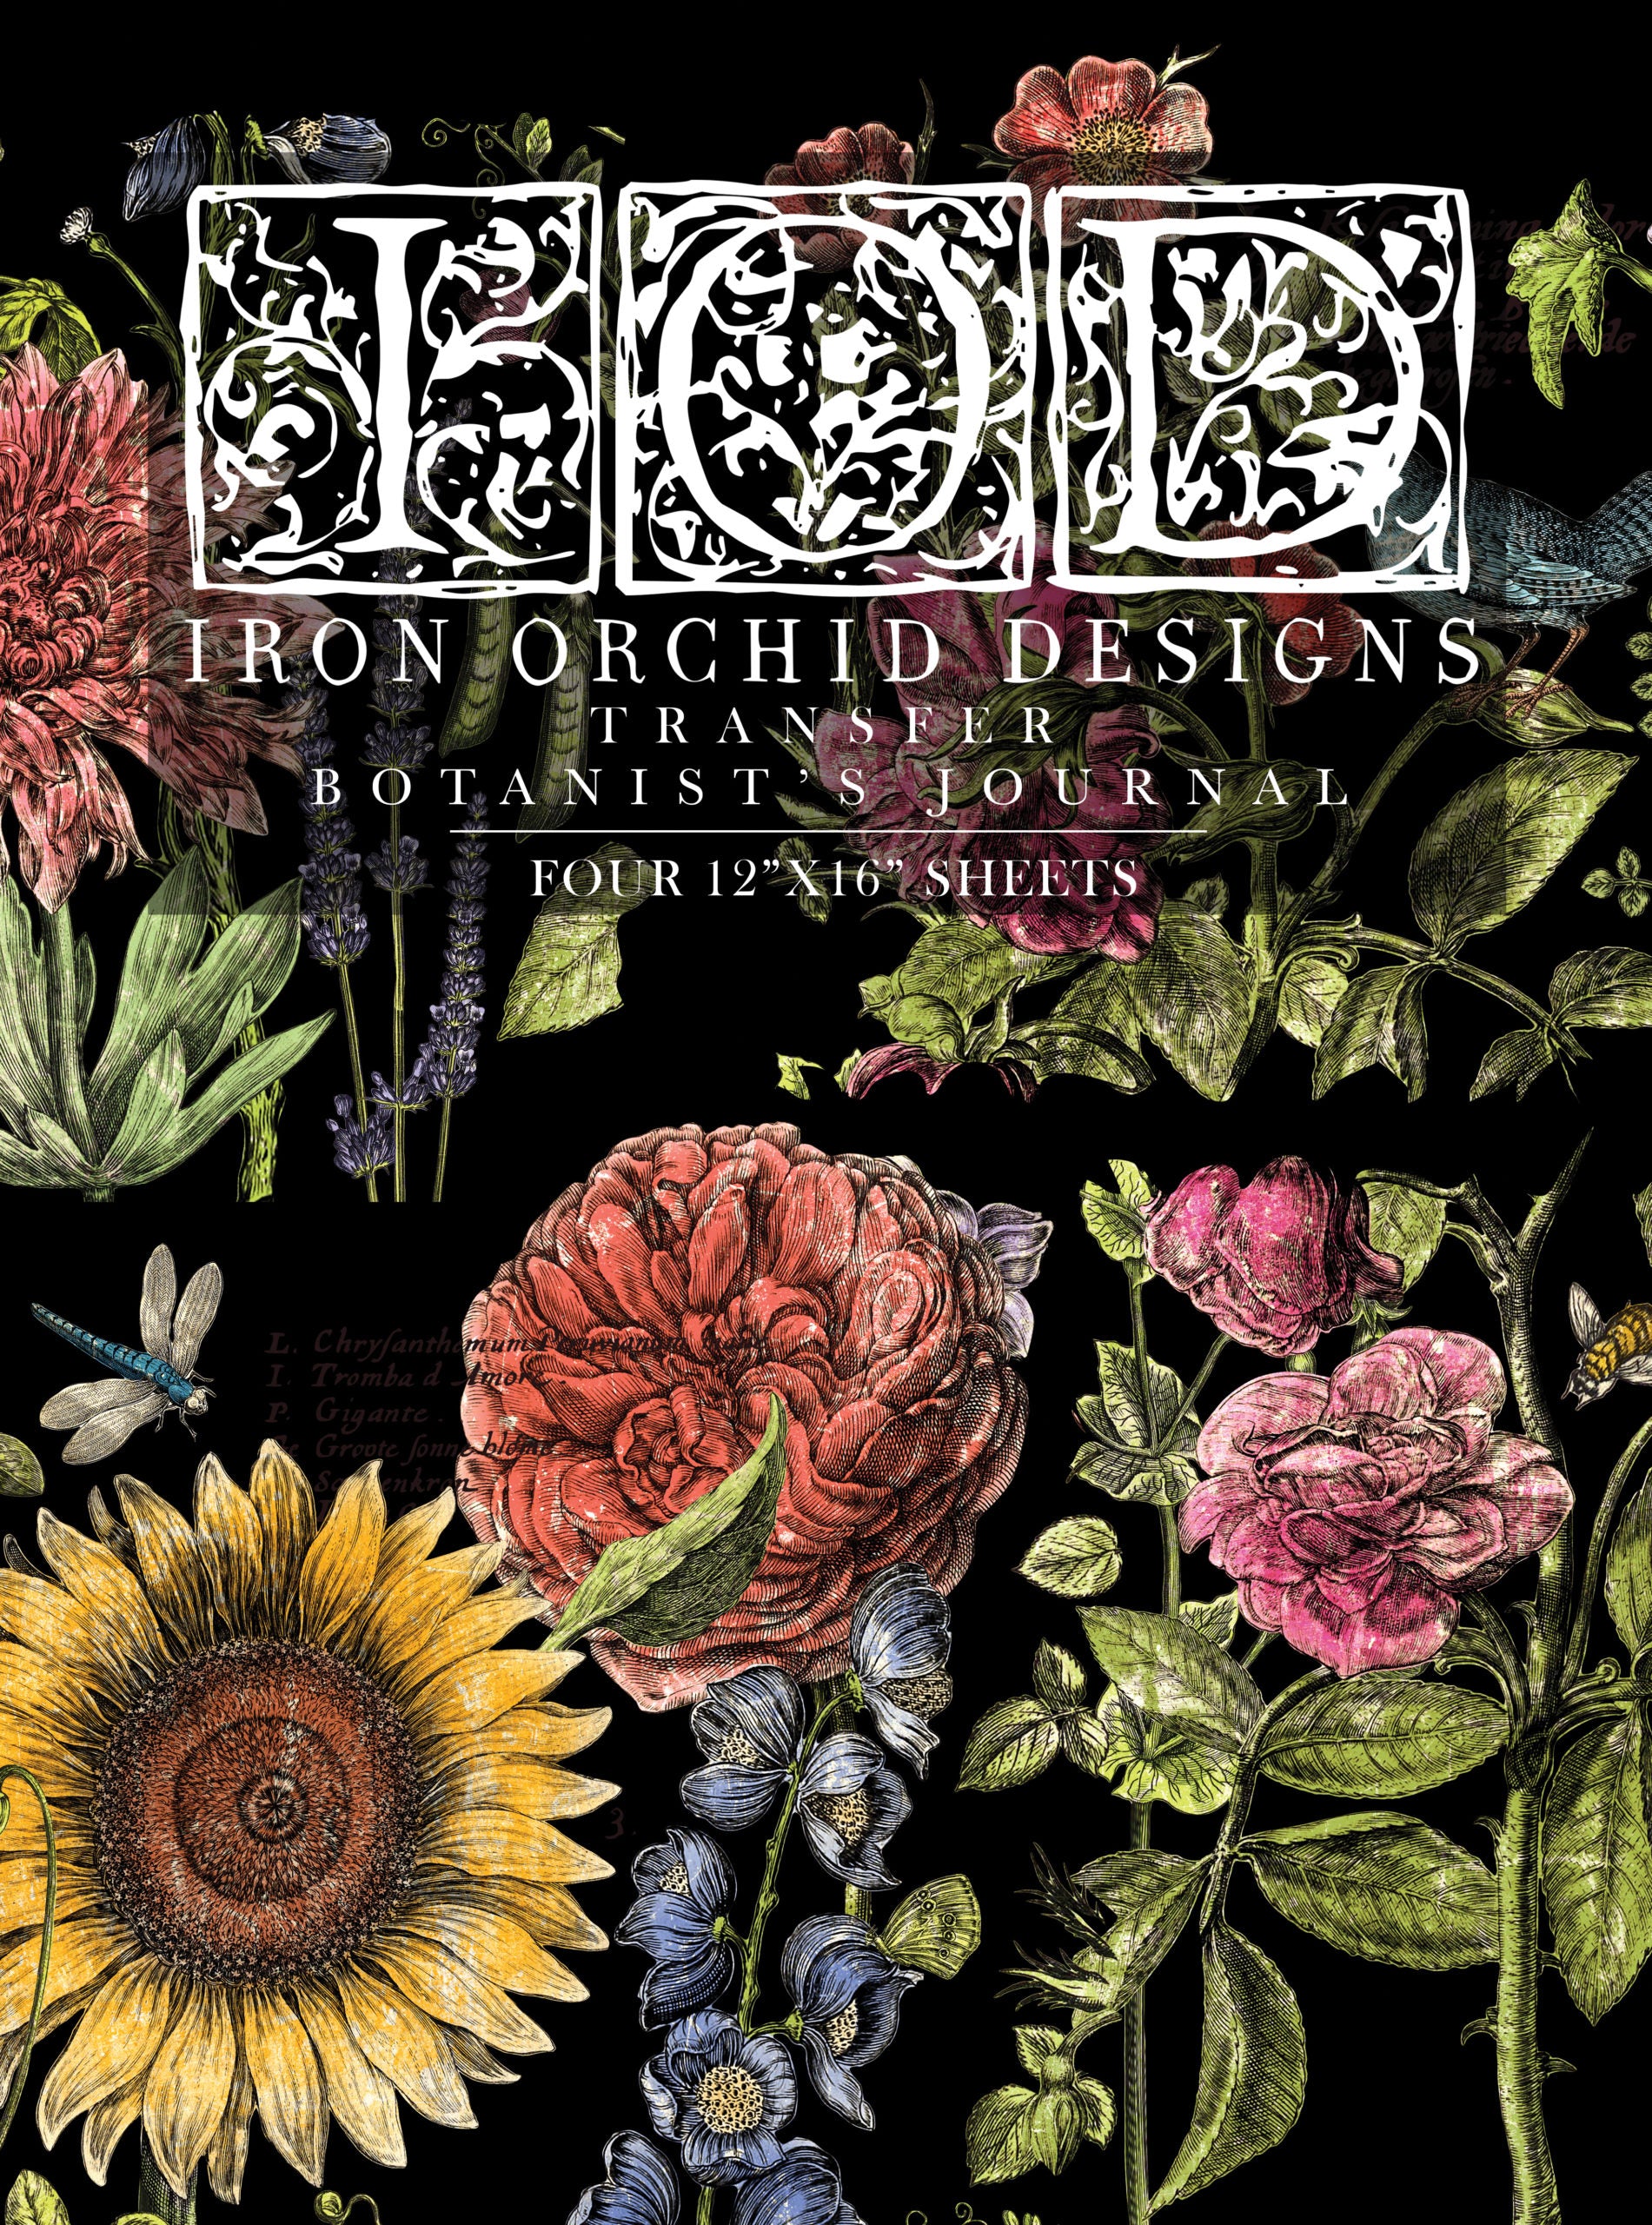 Flora Parisiensis Decor Transfer Iron Orchid Designs